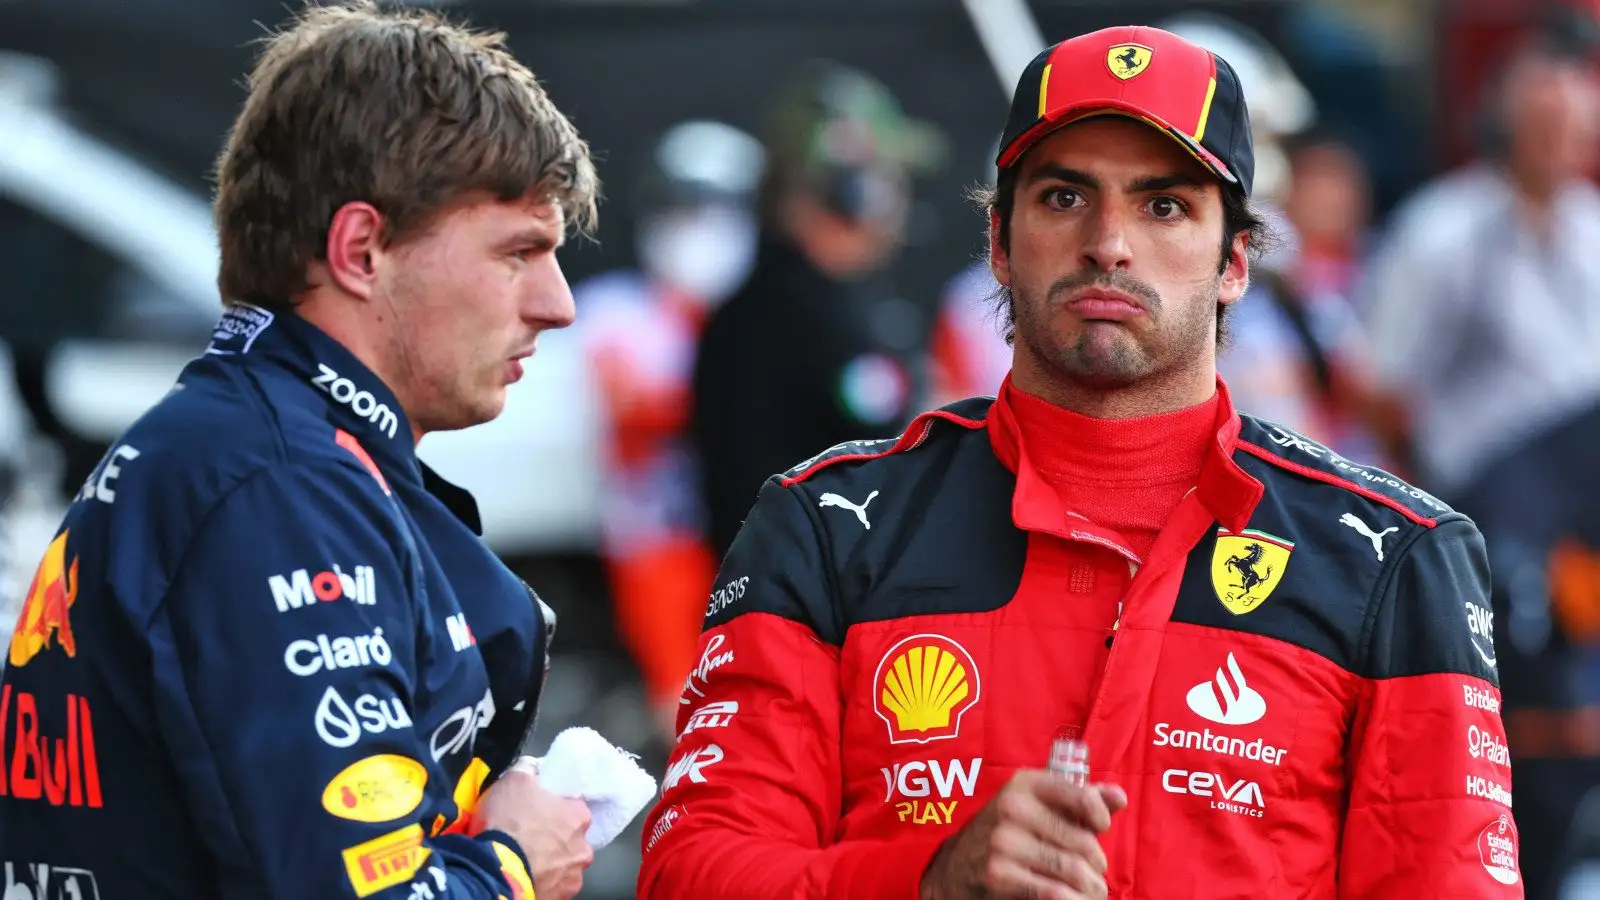 Ferrari driver Carlos Sainz pulls a face while speaking with Max Verstappen.